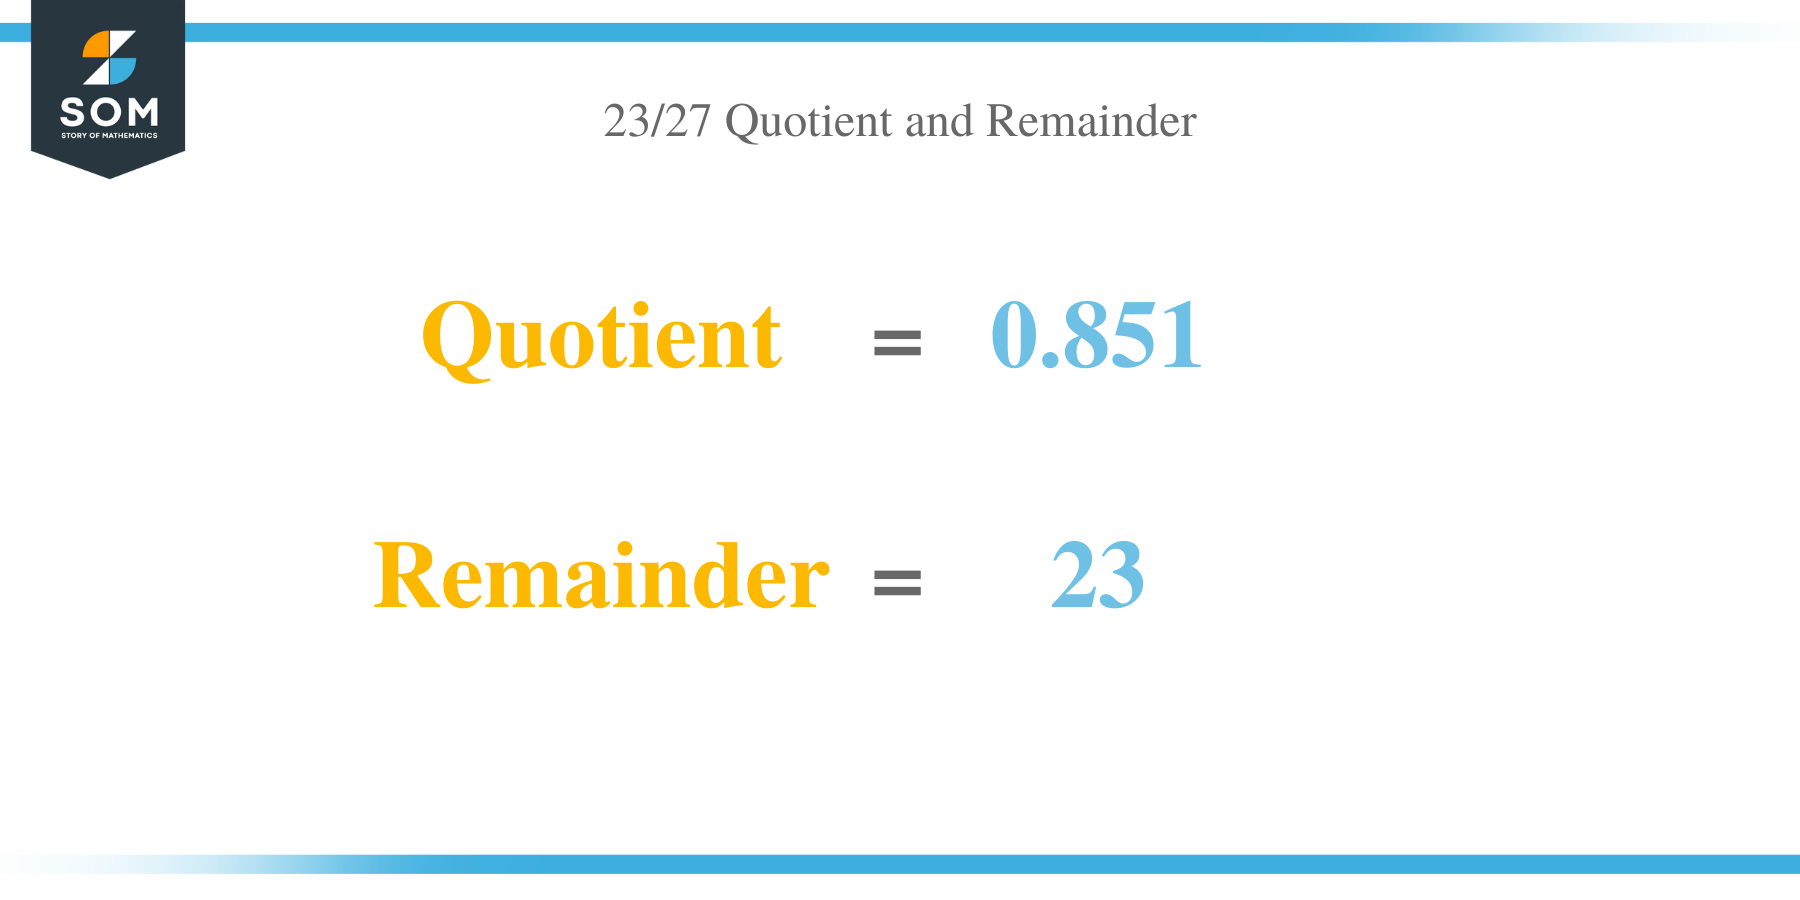 Quotient and Remainder of 23 per 27